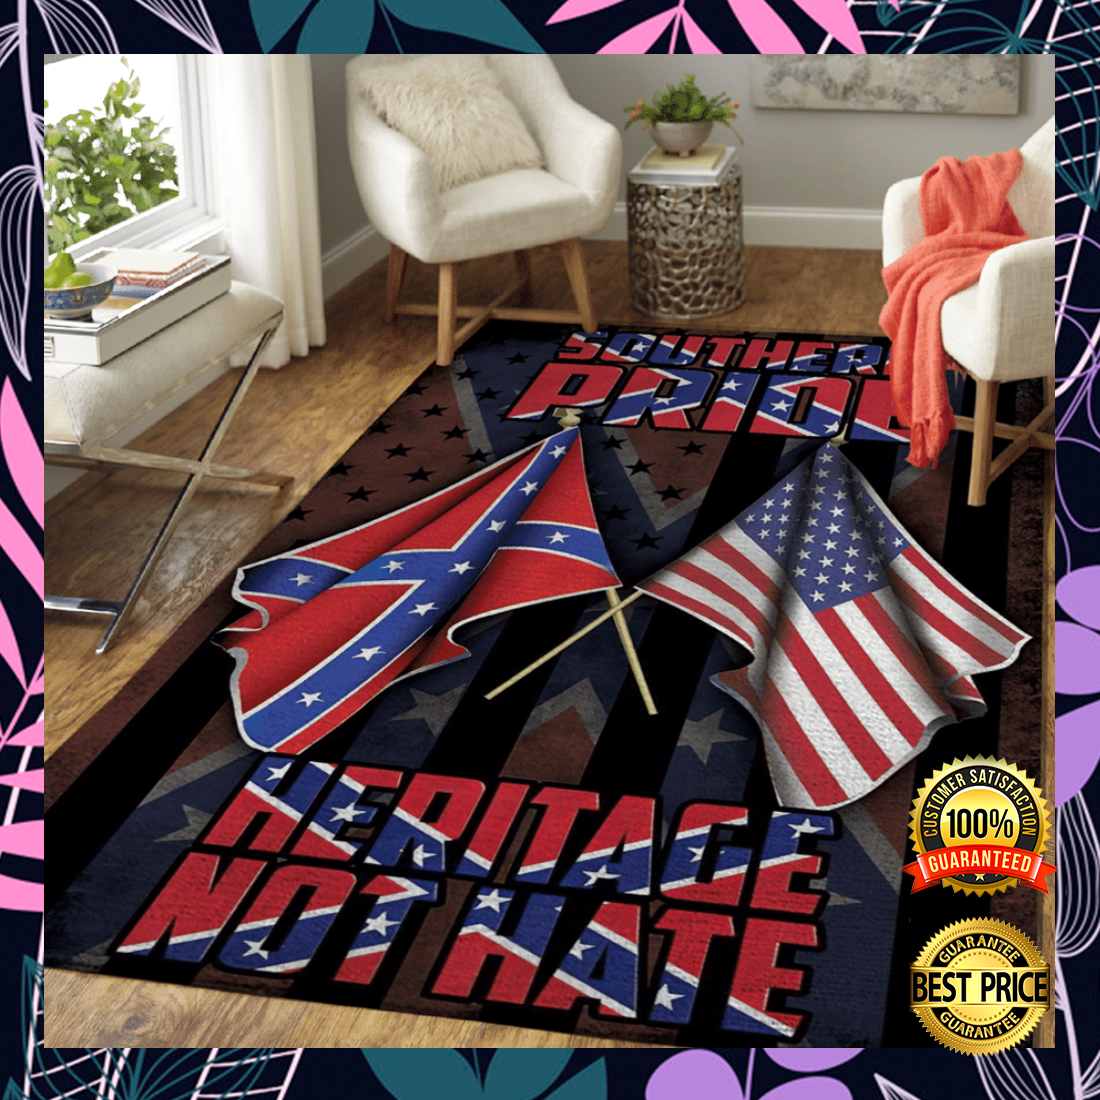 Southern pride heritage not hate rug